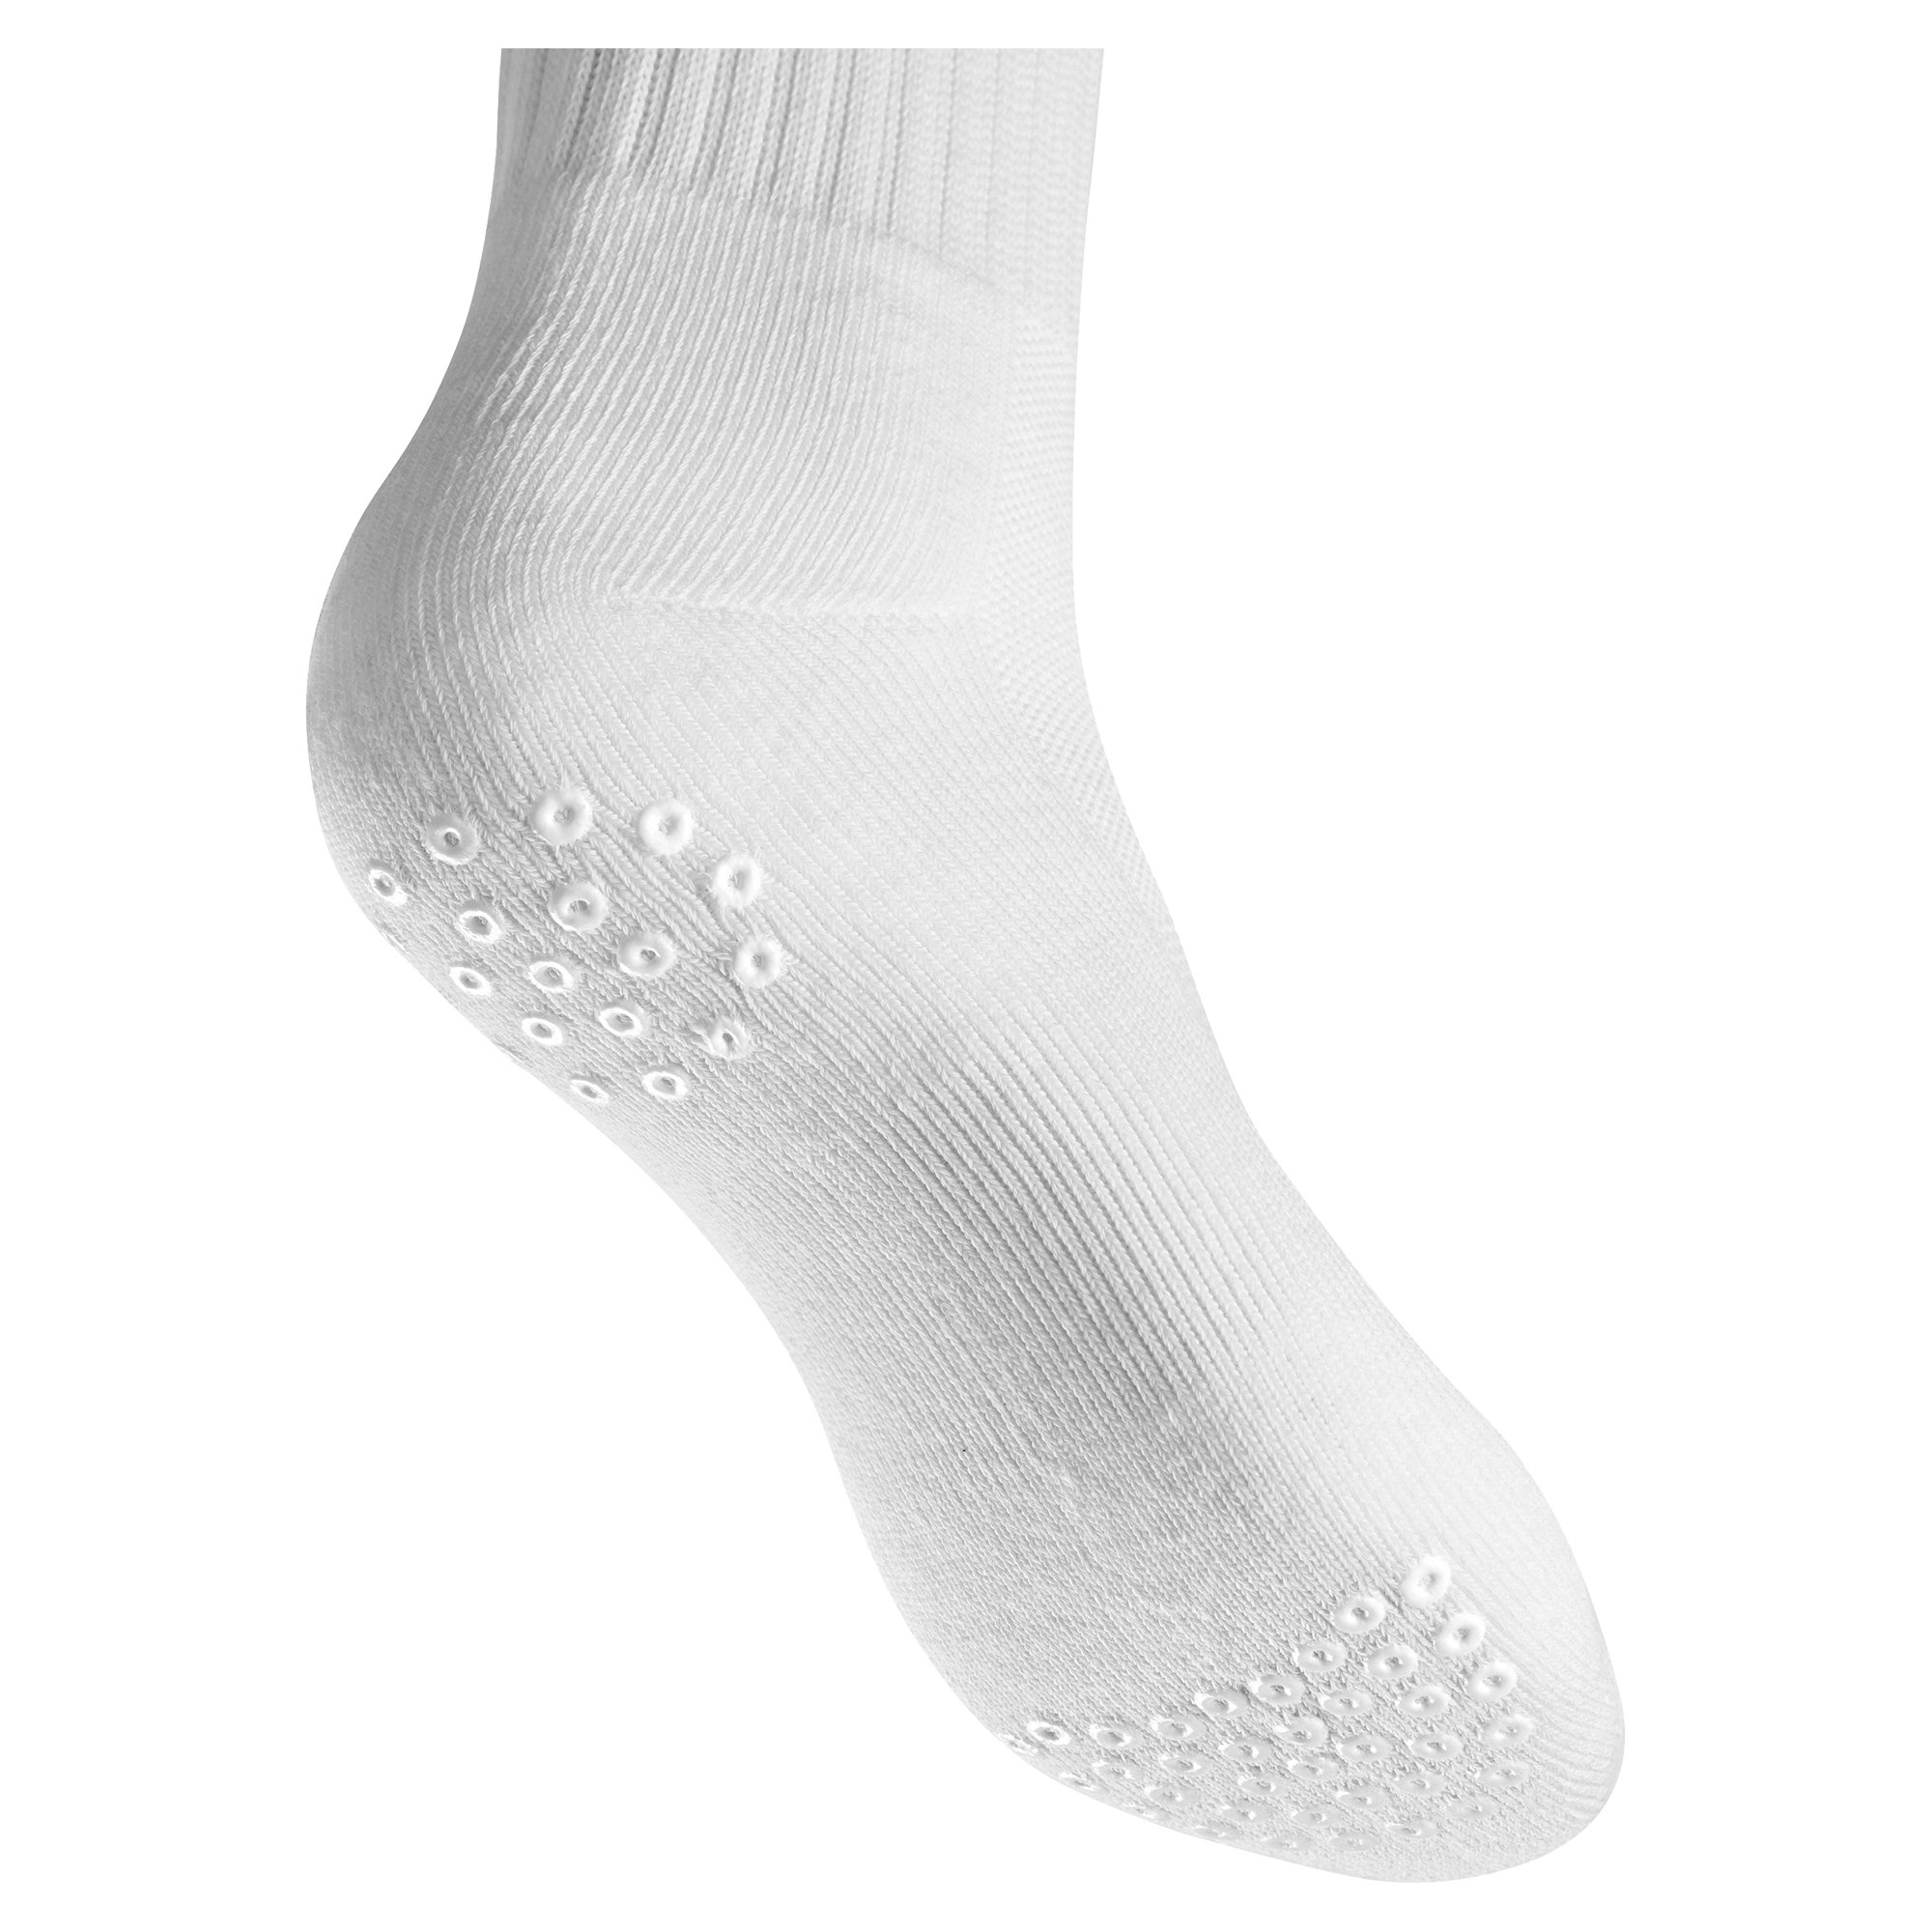 Mizuno Volley Socks Long